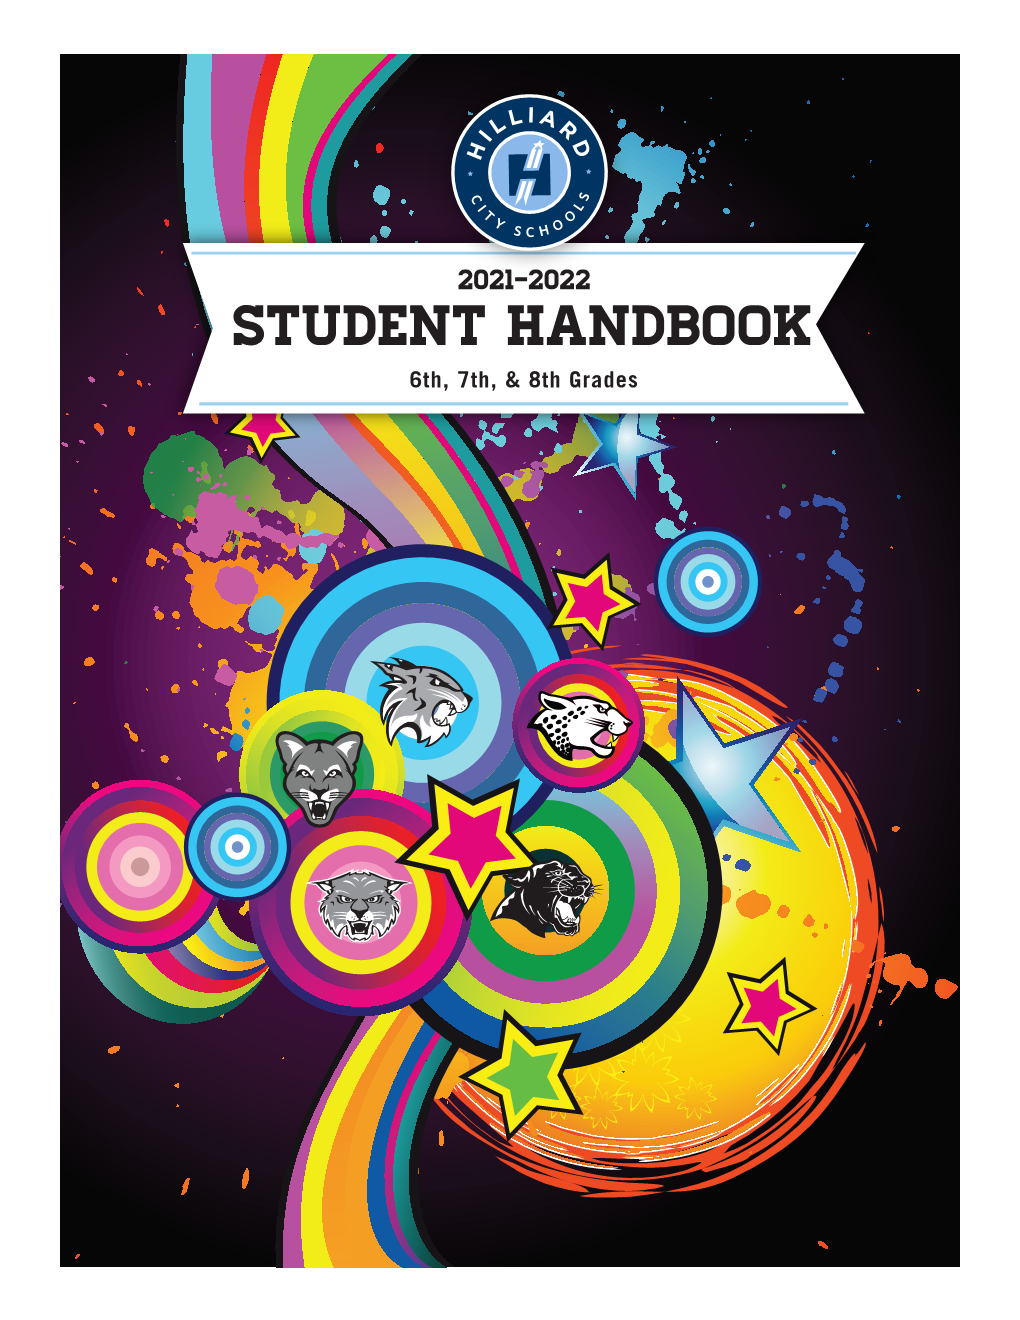 Middle School Student Handbook